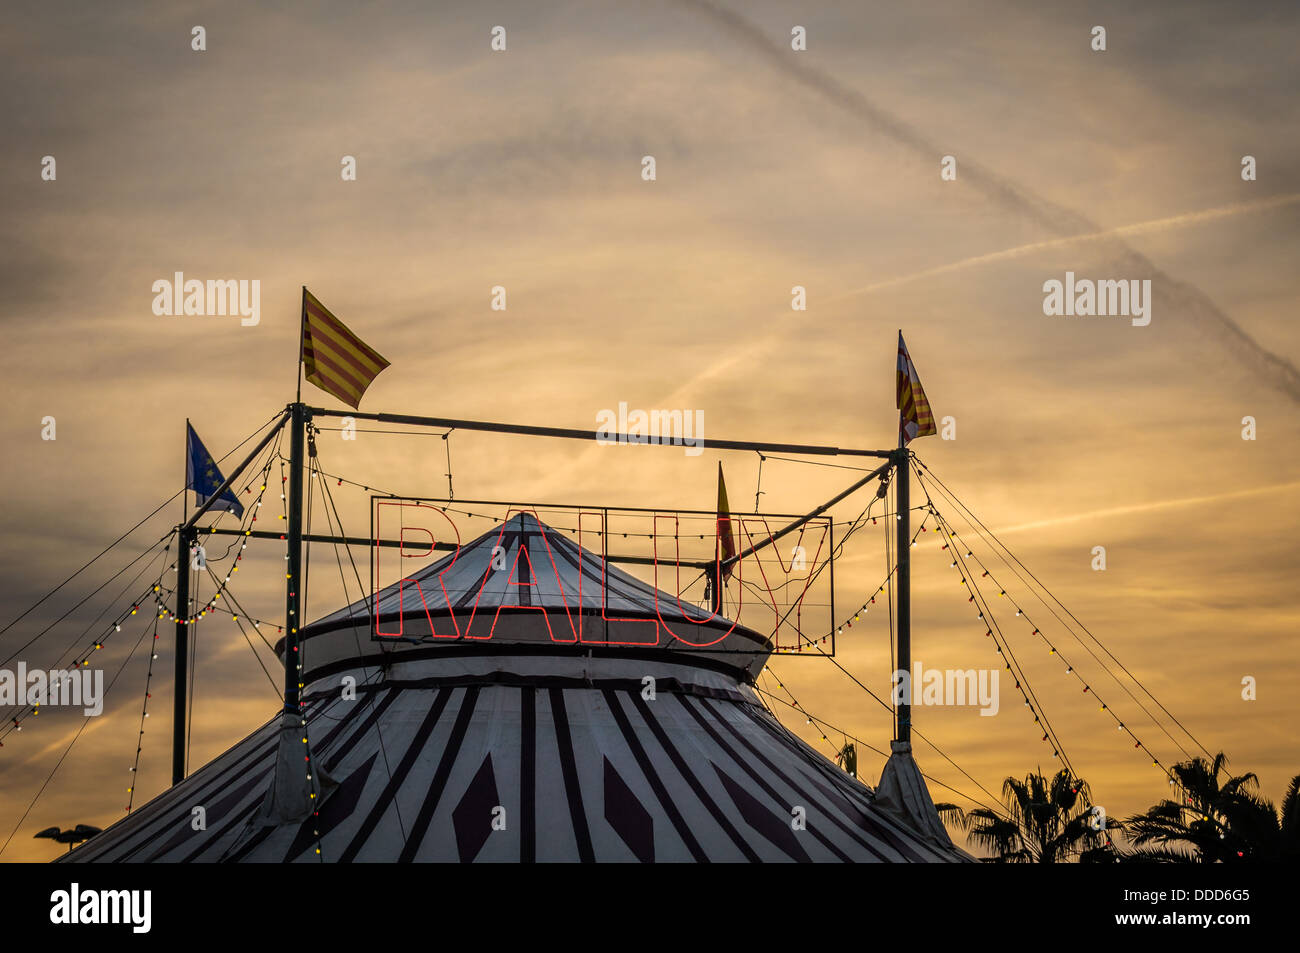 Circus Raluy big tent. Barcelona, Spain. Stock Photo